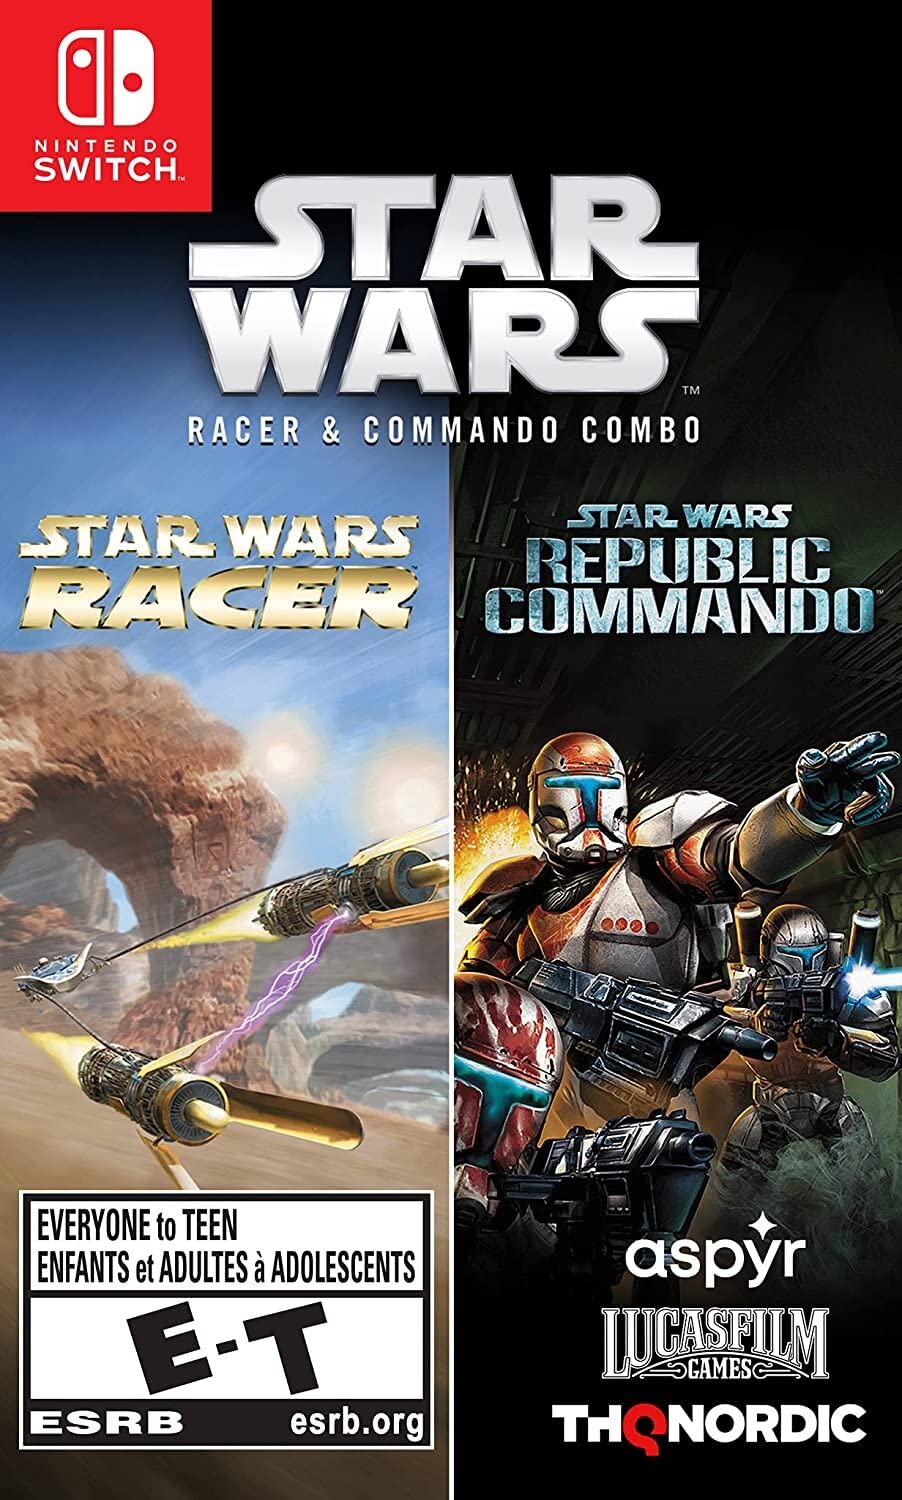 Star Wars Racer & Commando